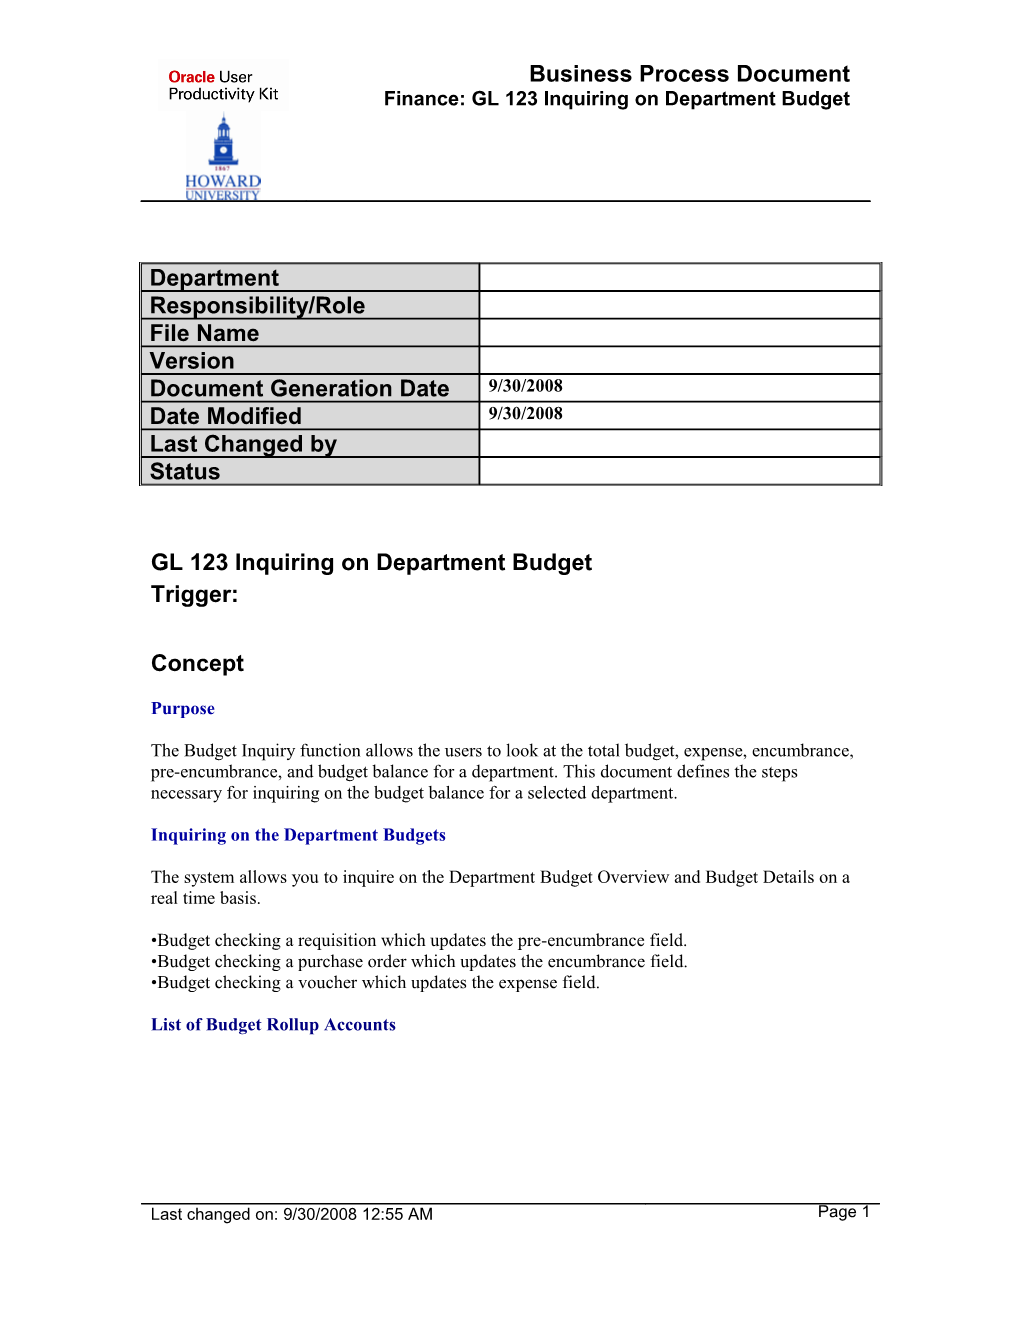 GL 123 Inquiring on Department Budget